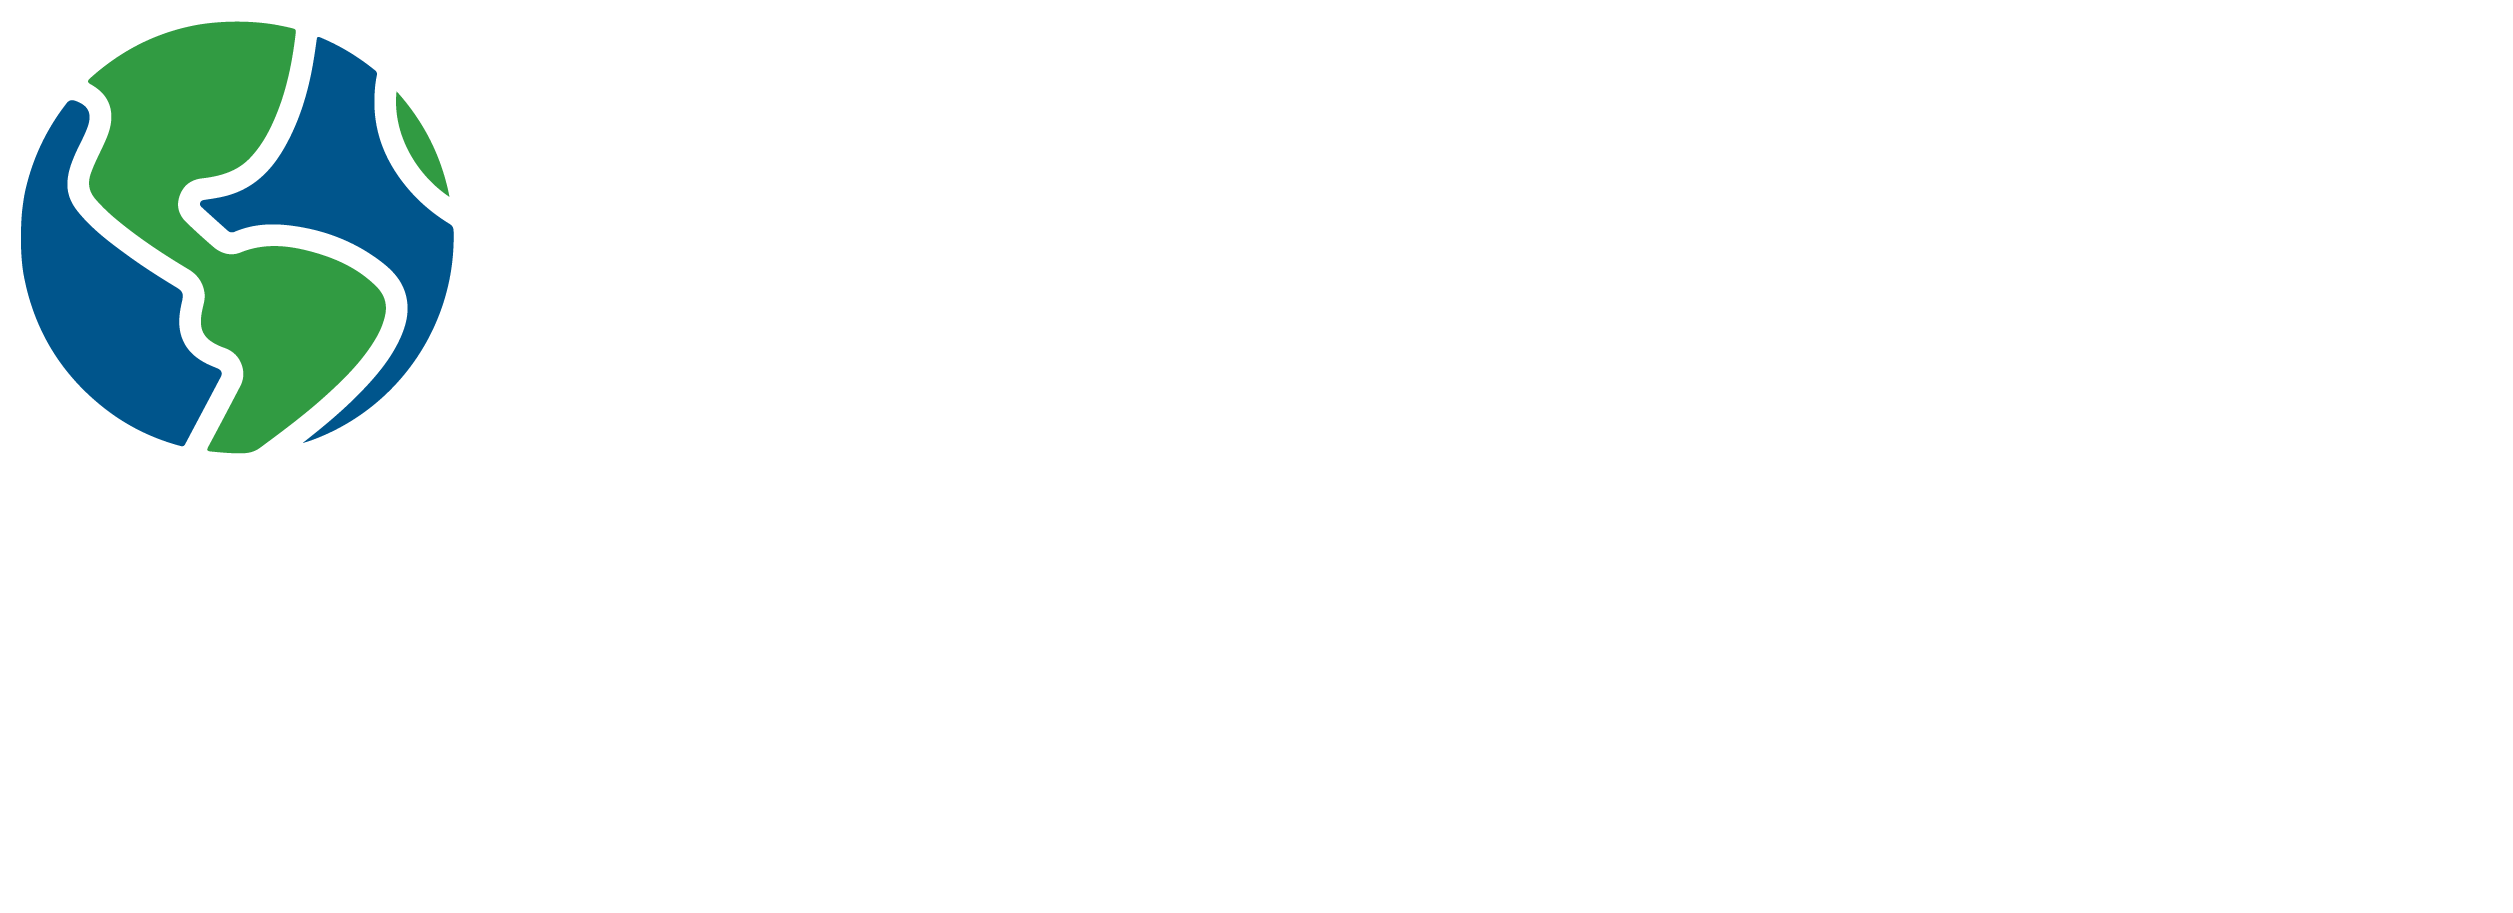 Globe Life Vena Organization